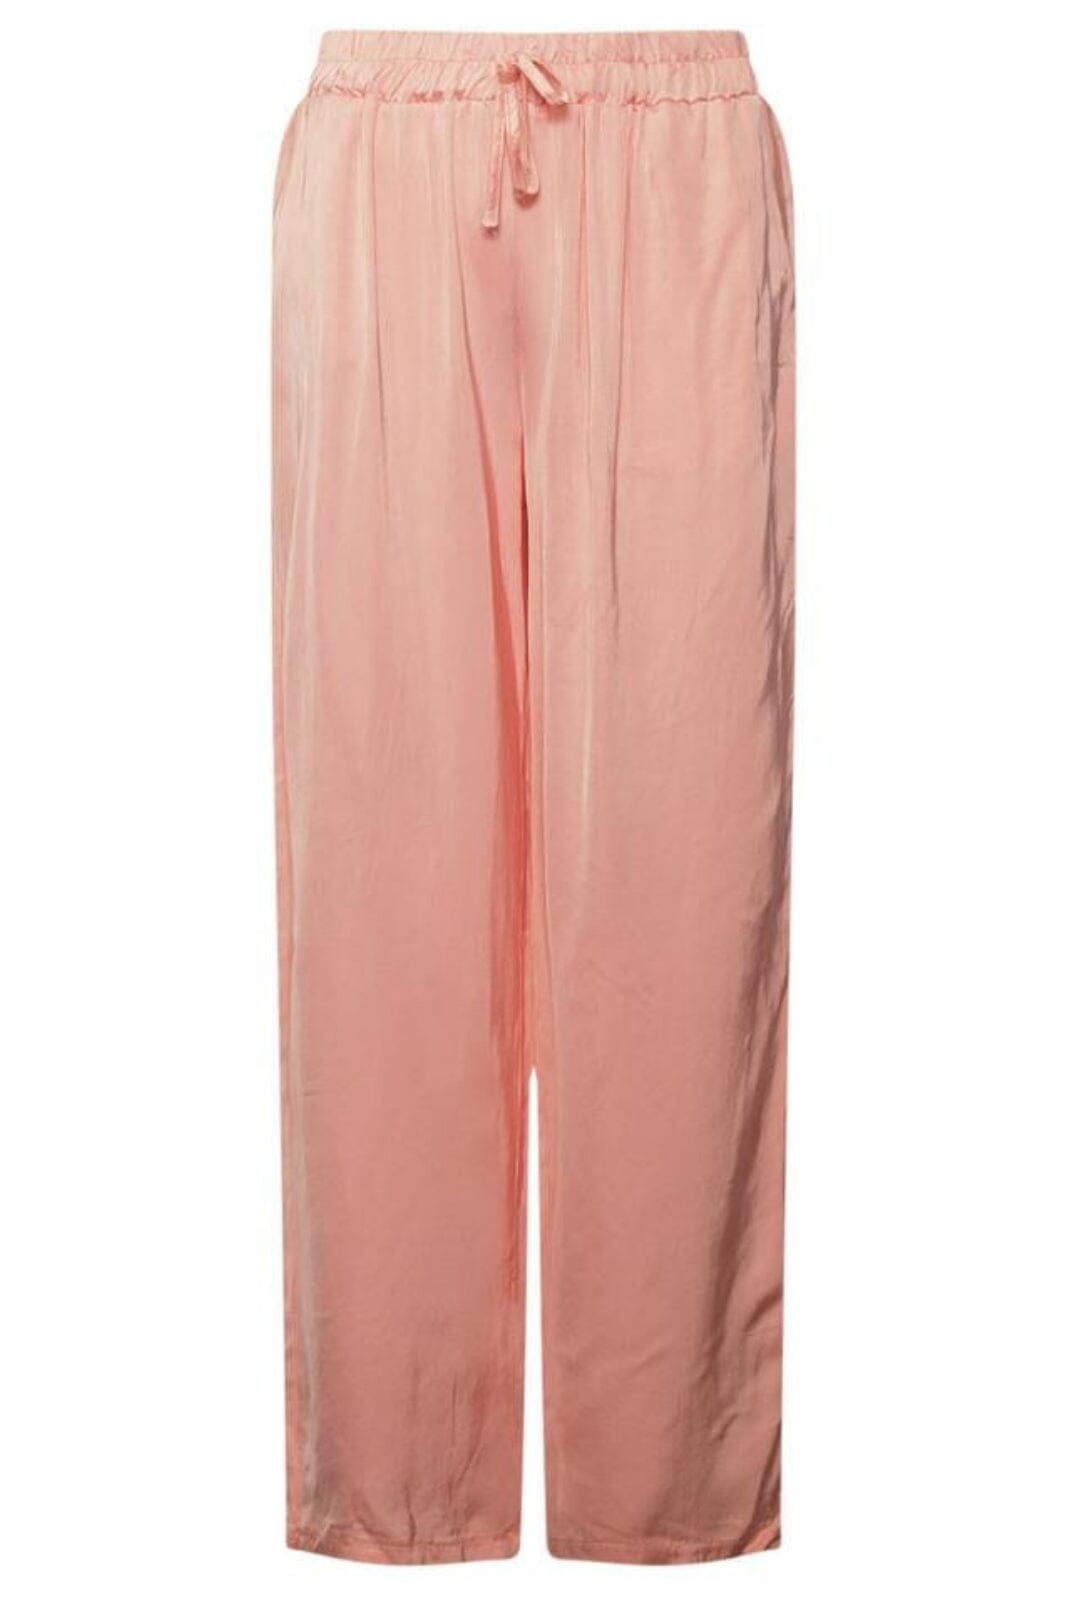 Forudbestilling - Noella - Kamara Pants - 1094 Shell Pink Bukser 